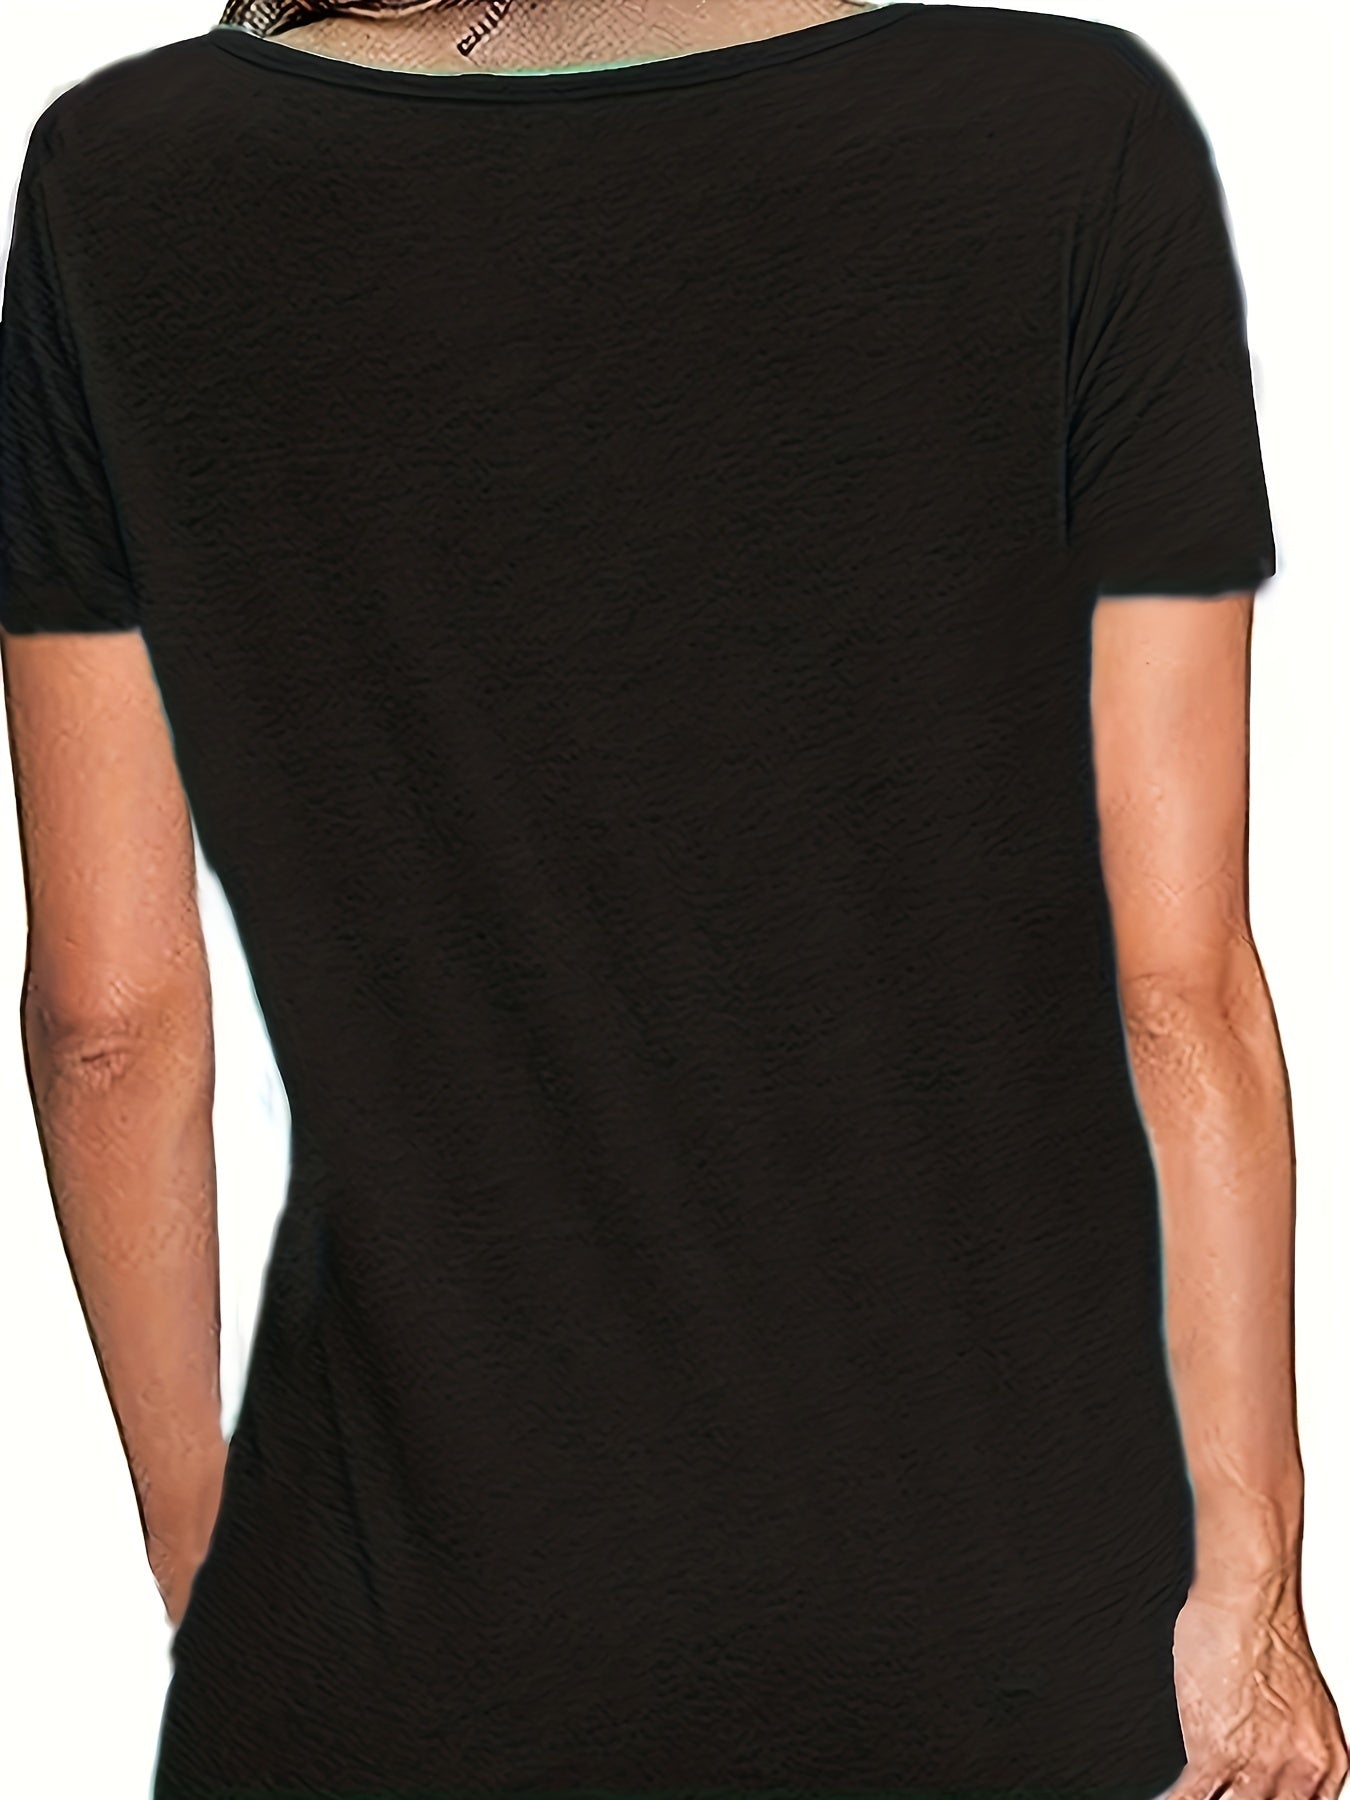 Letter Print T-shirt, Casual Crew Neck Short Sleeve Summer T-shirt, Women's Clothing